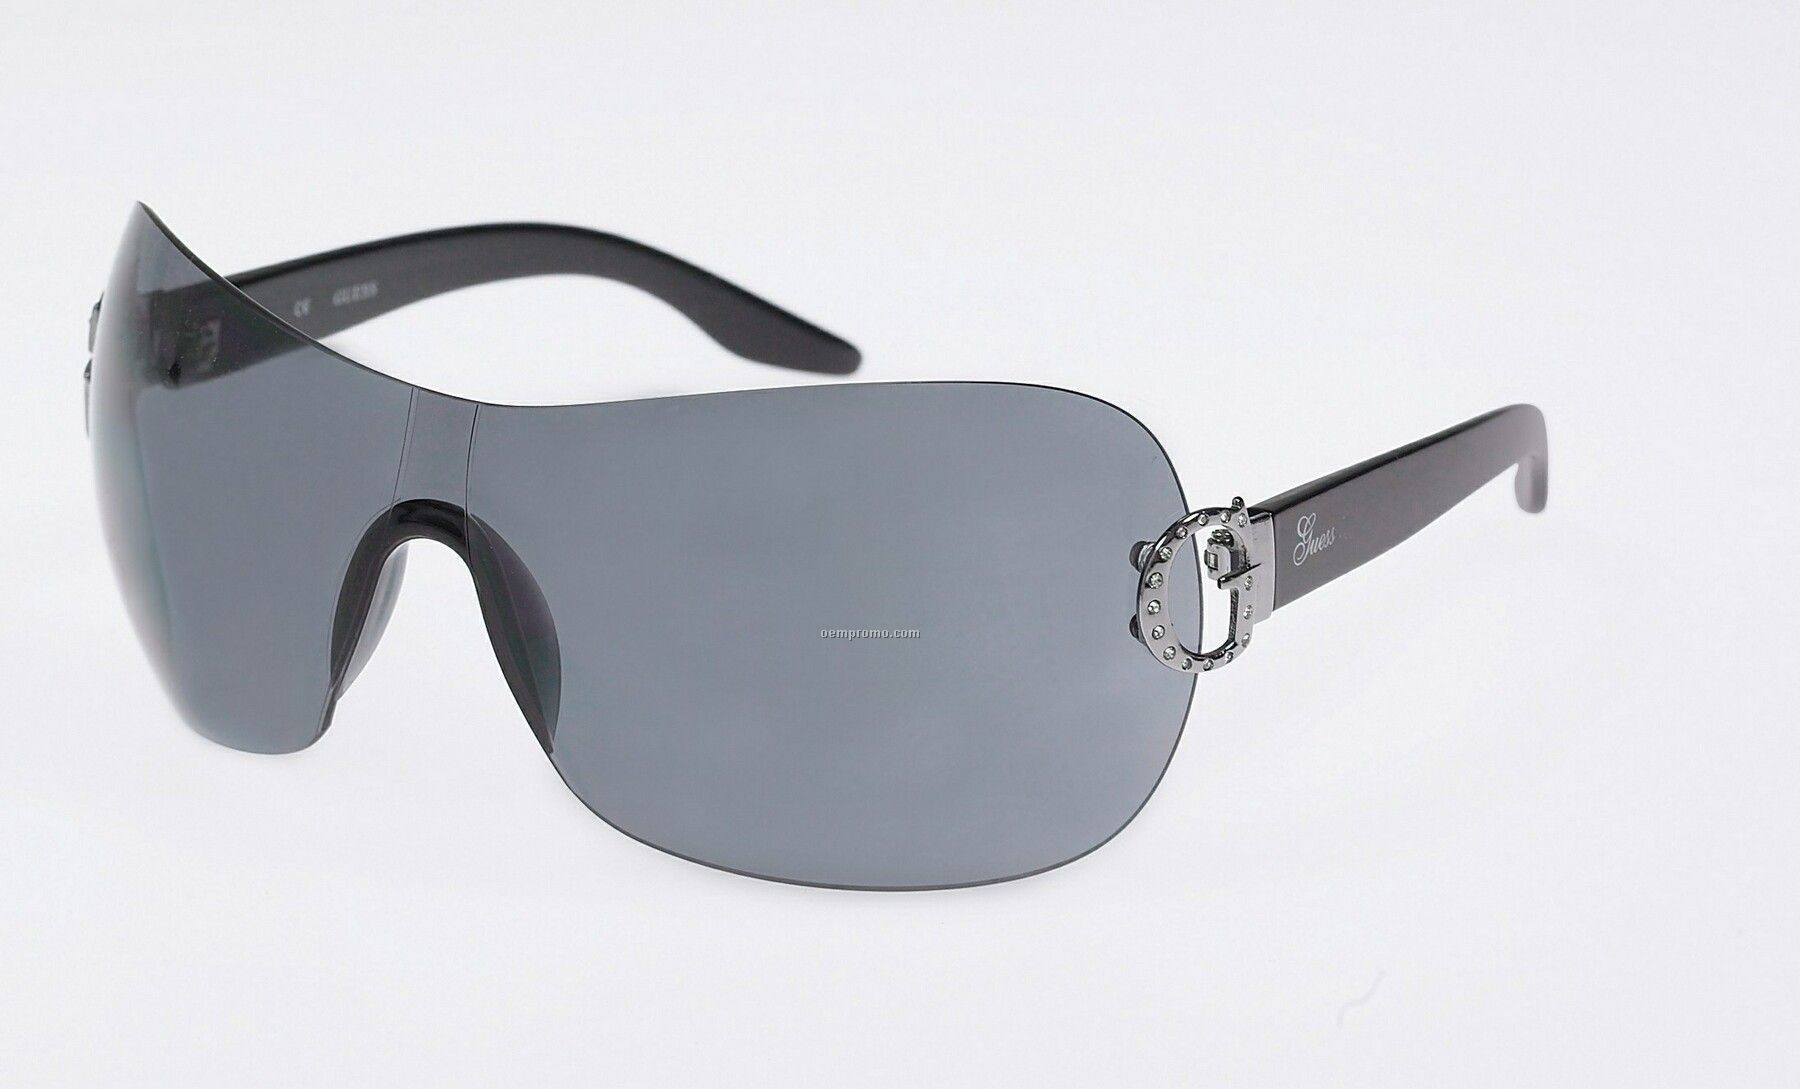 Black Guess Ladies Sunglasses W/ Silver